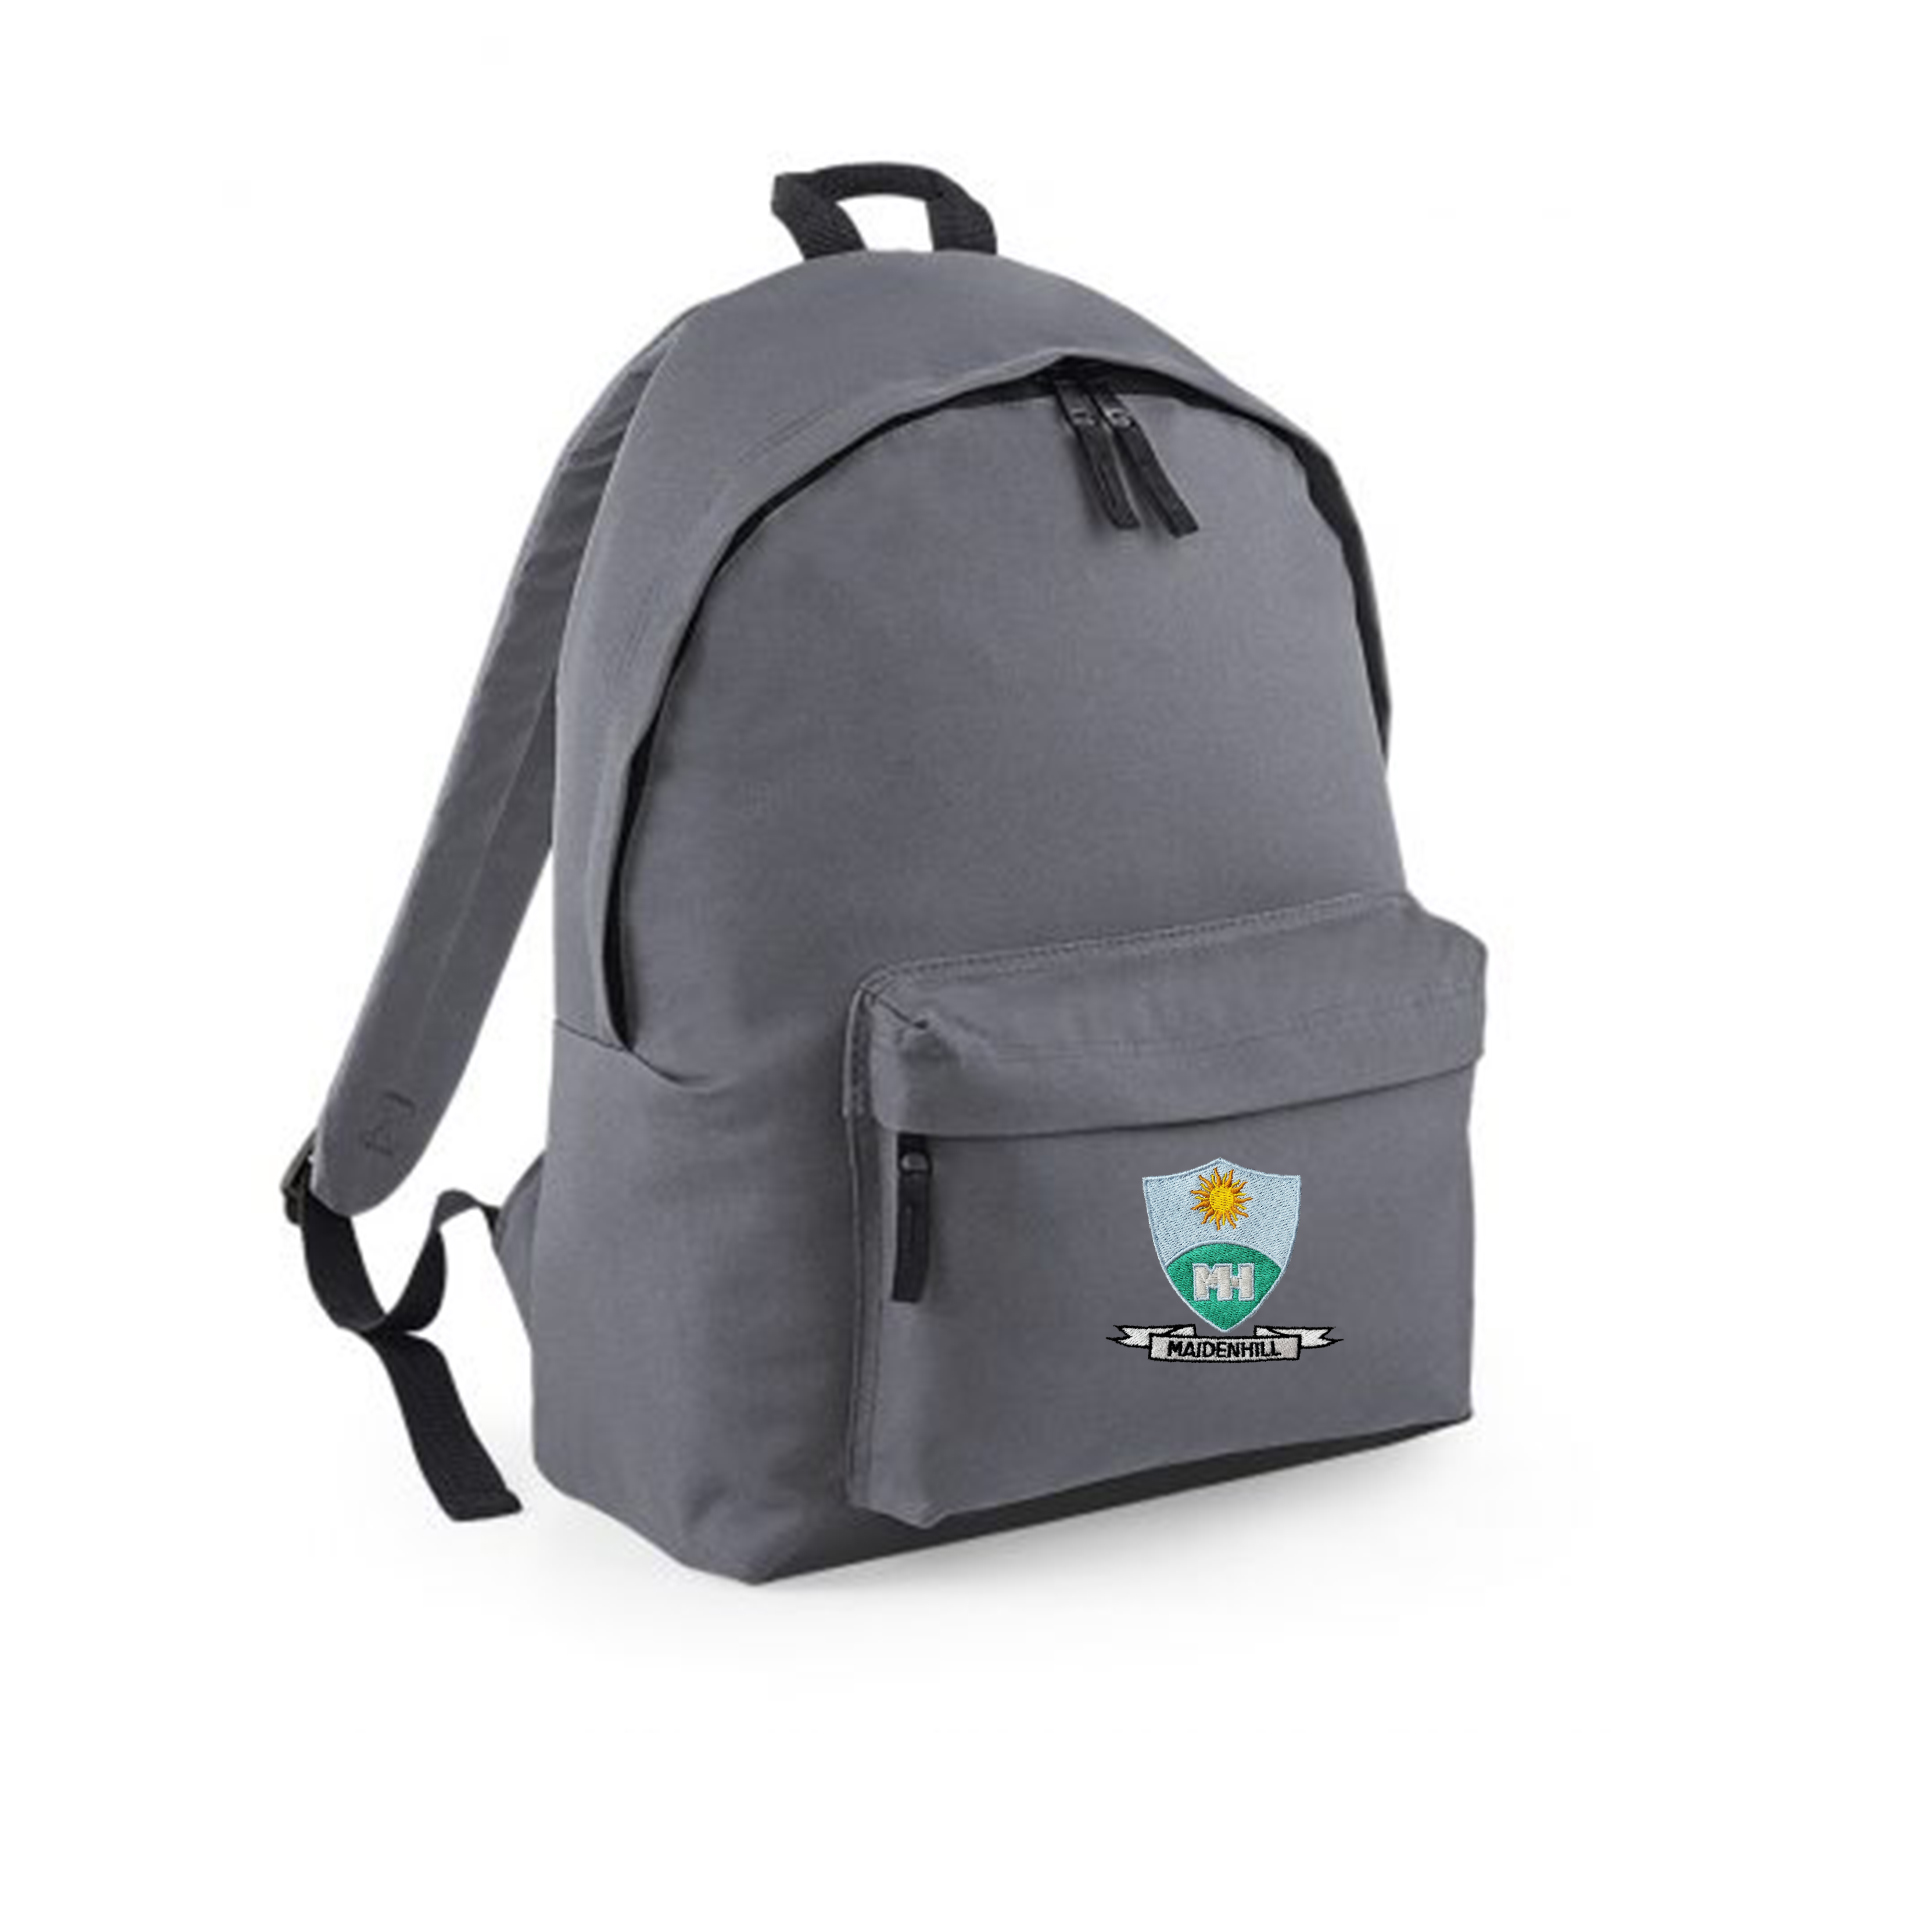 Maidenhill Grey School Bag (NEW)